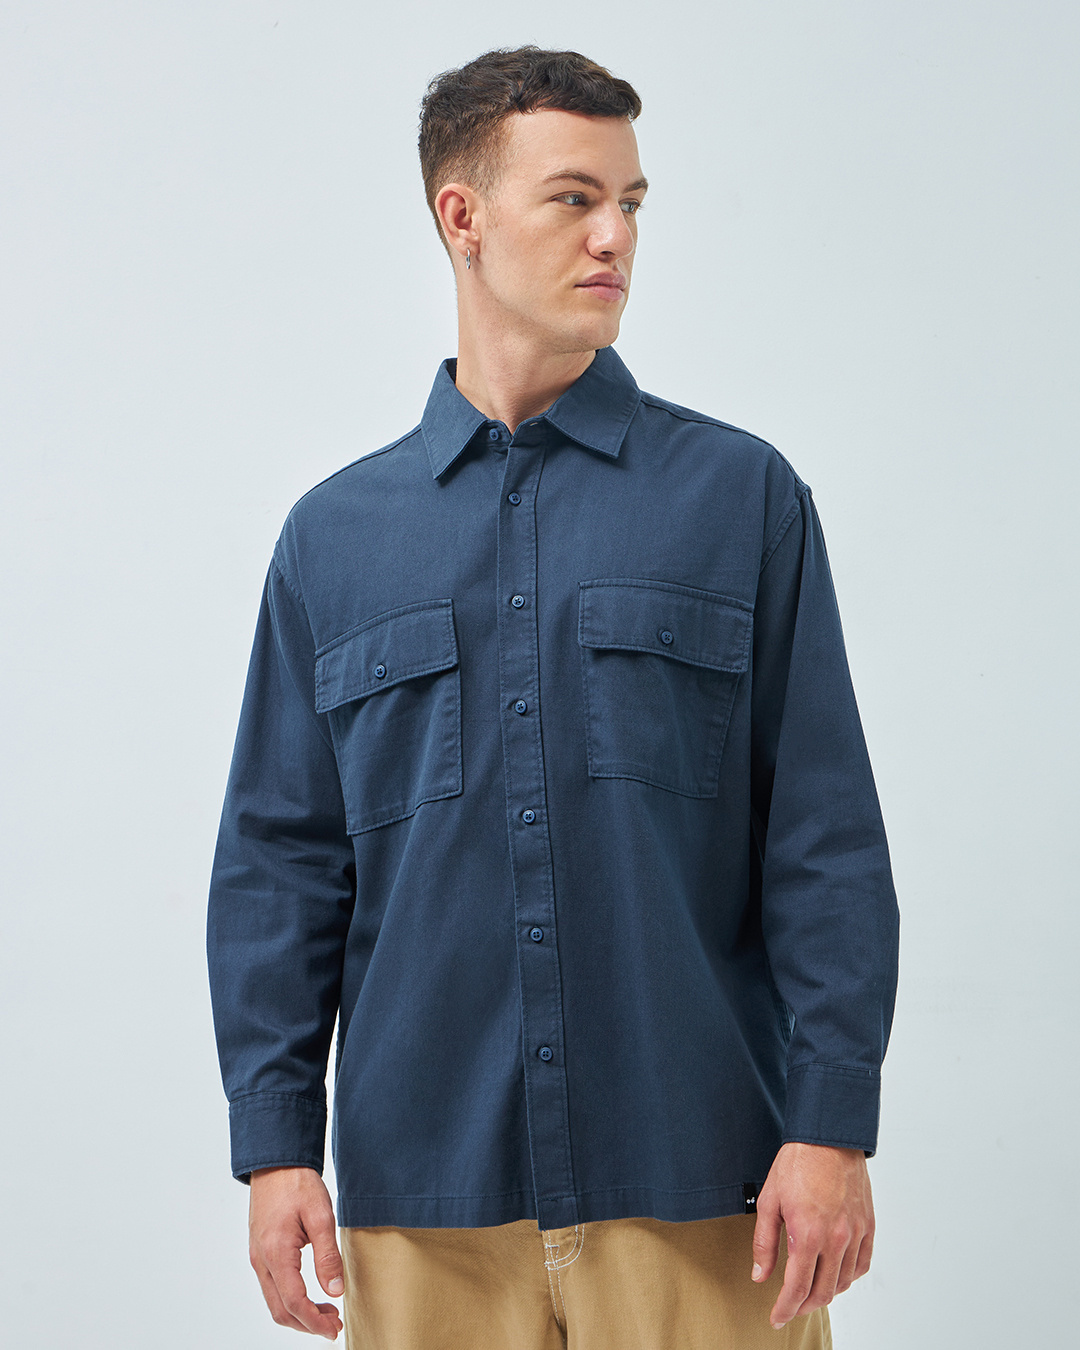 Buy Men's Blue Oversized Shirt Online at Bewakoof